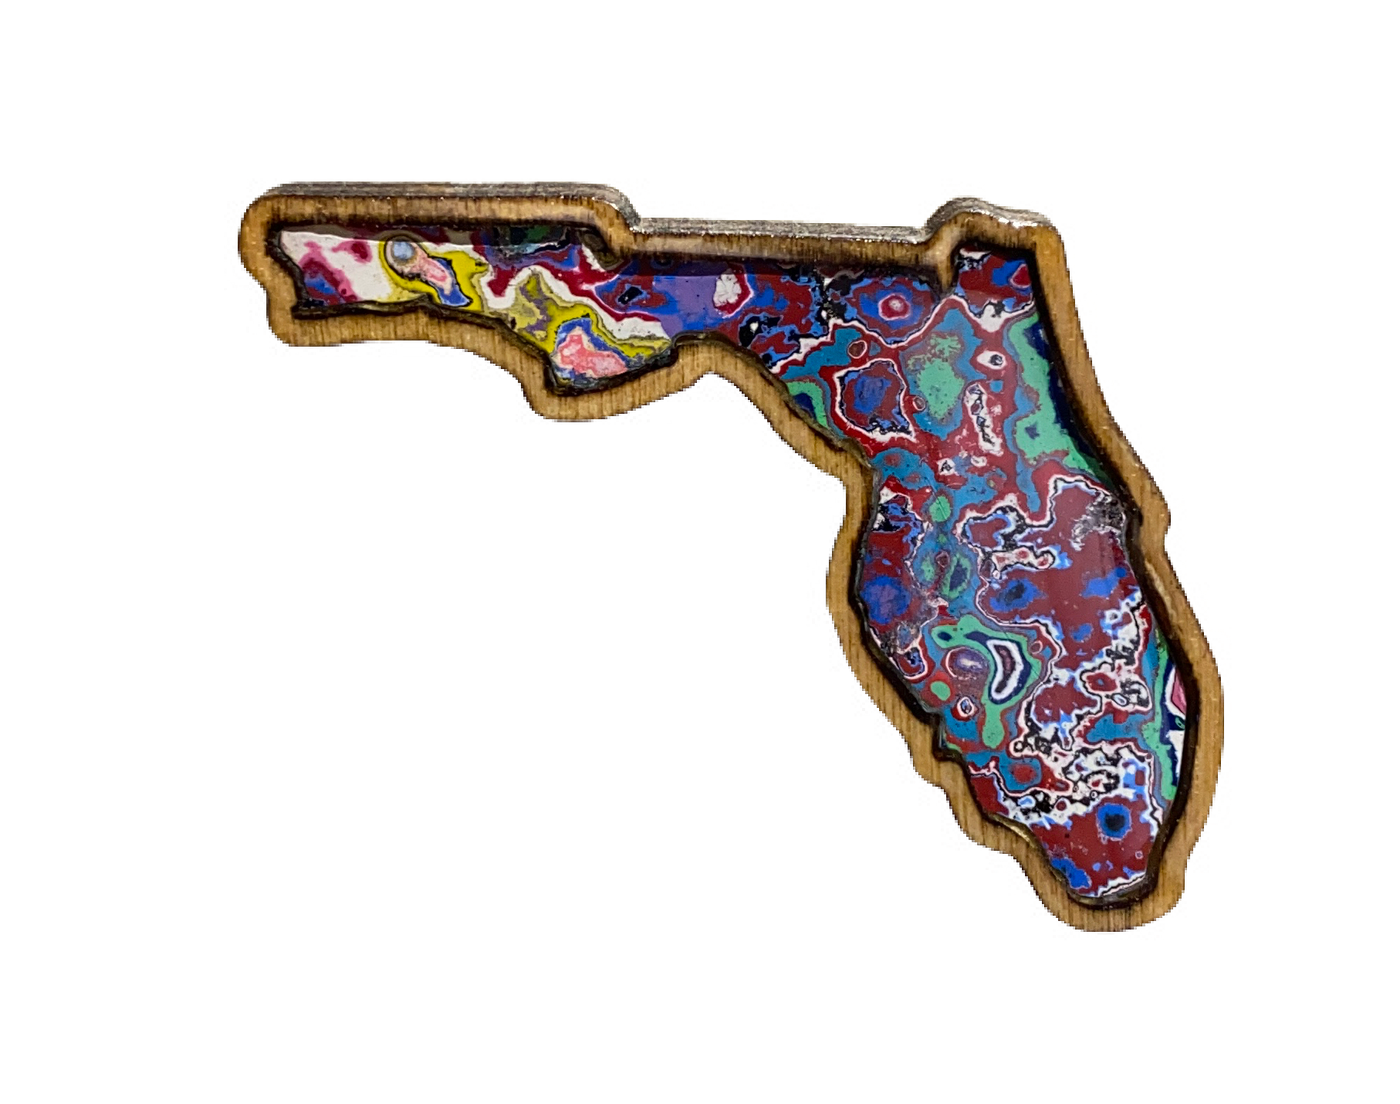 Florida (Magnet)